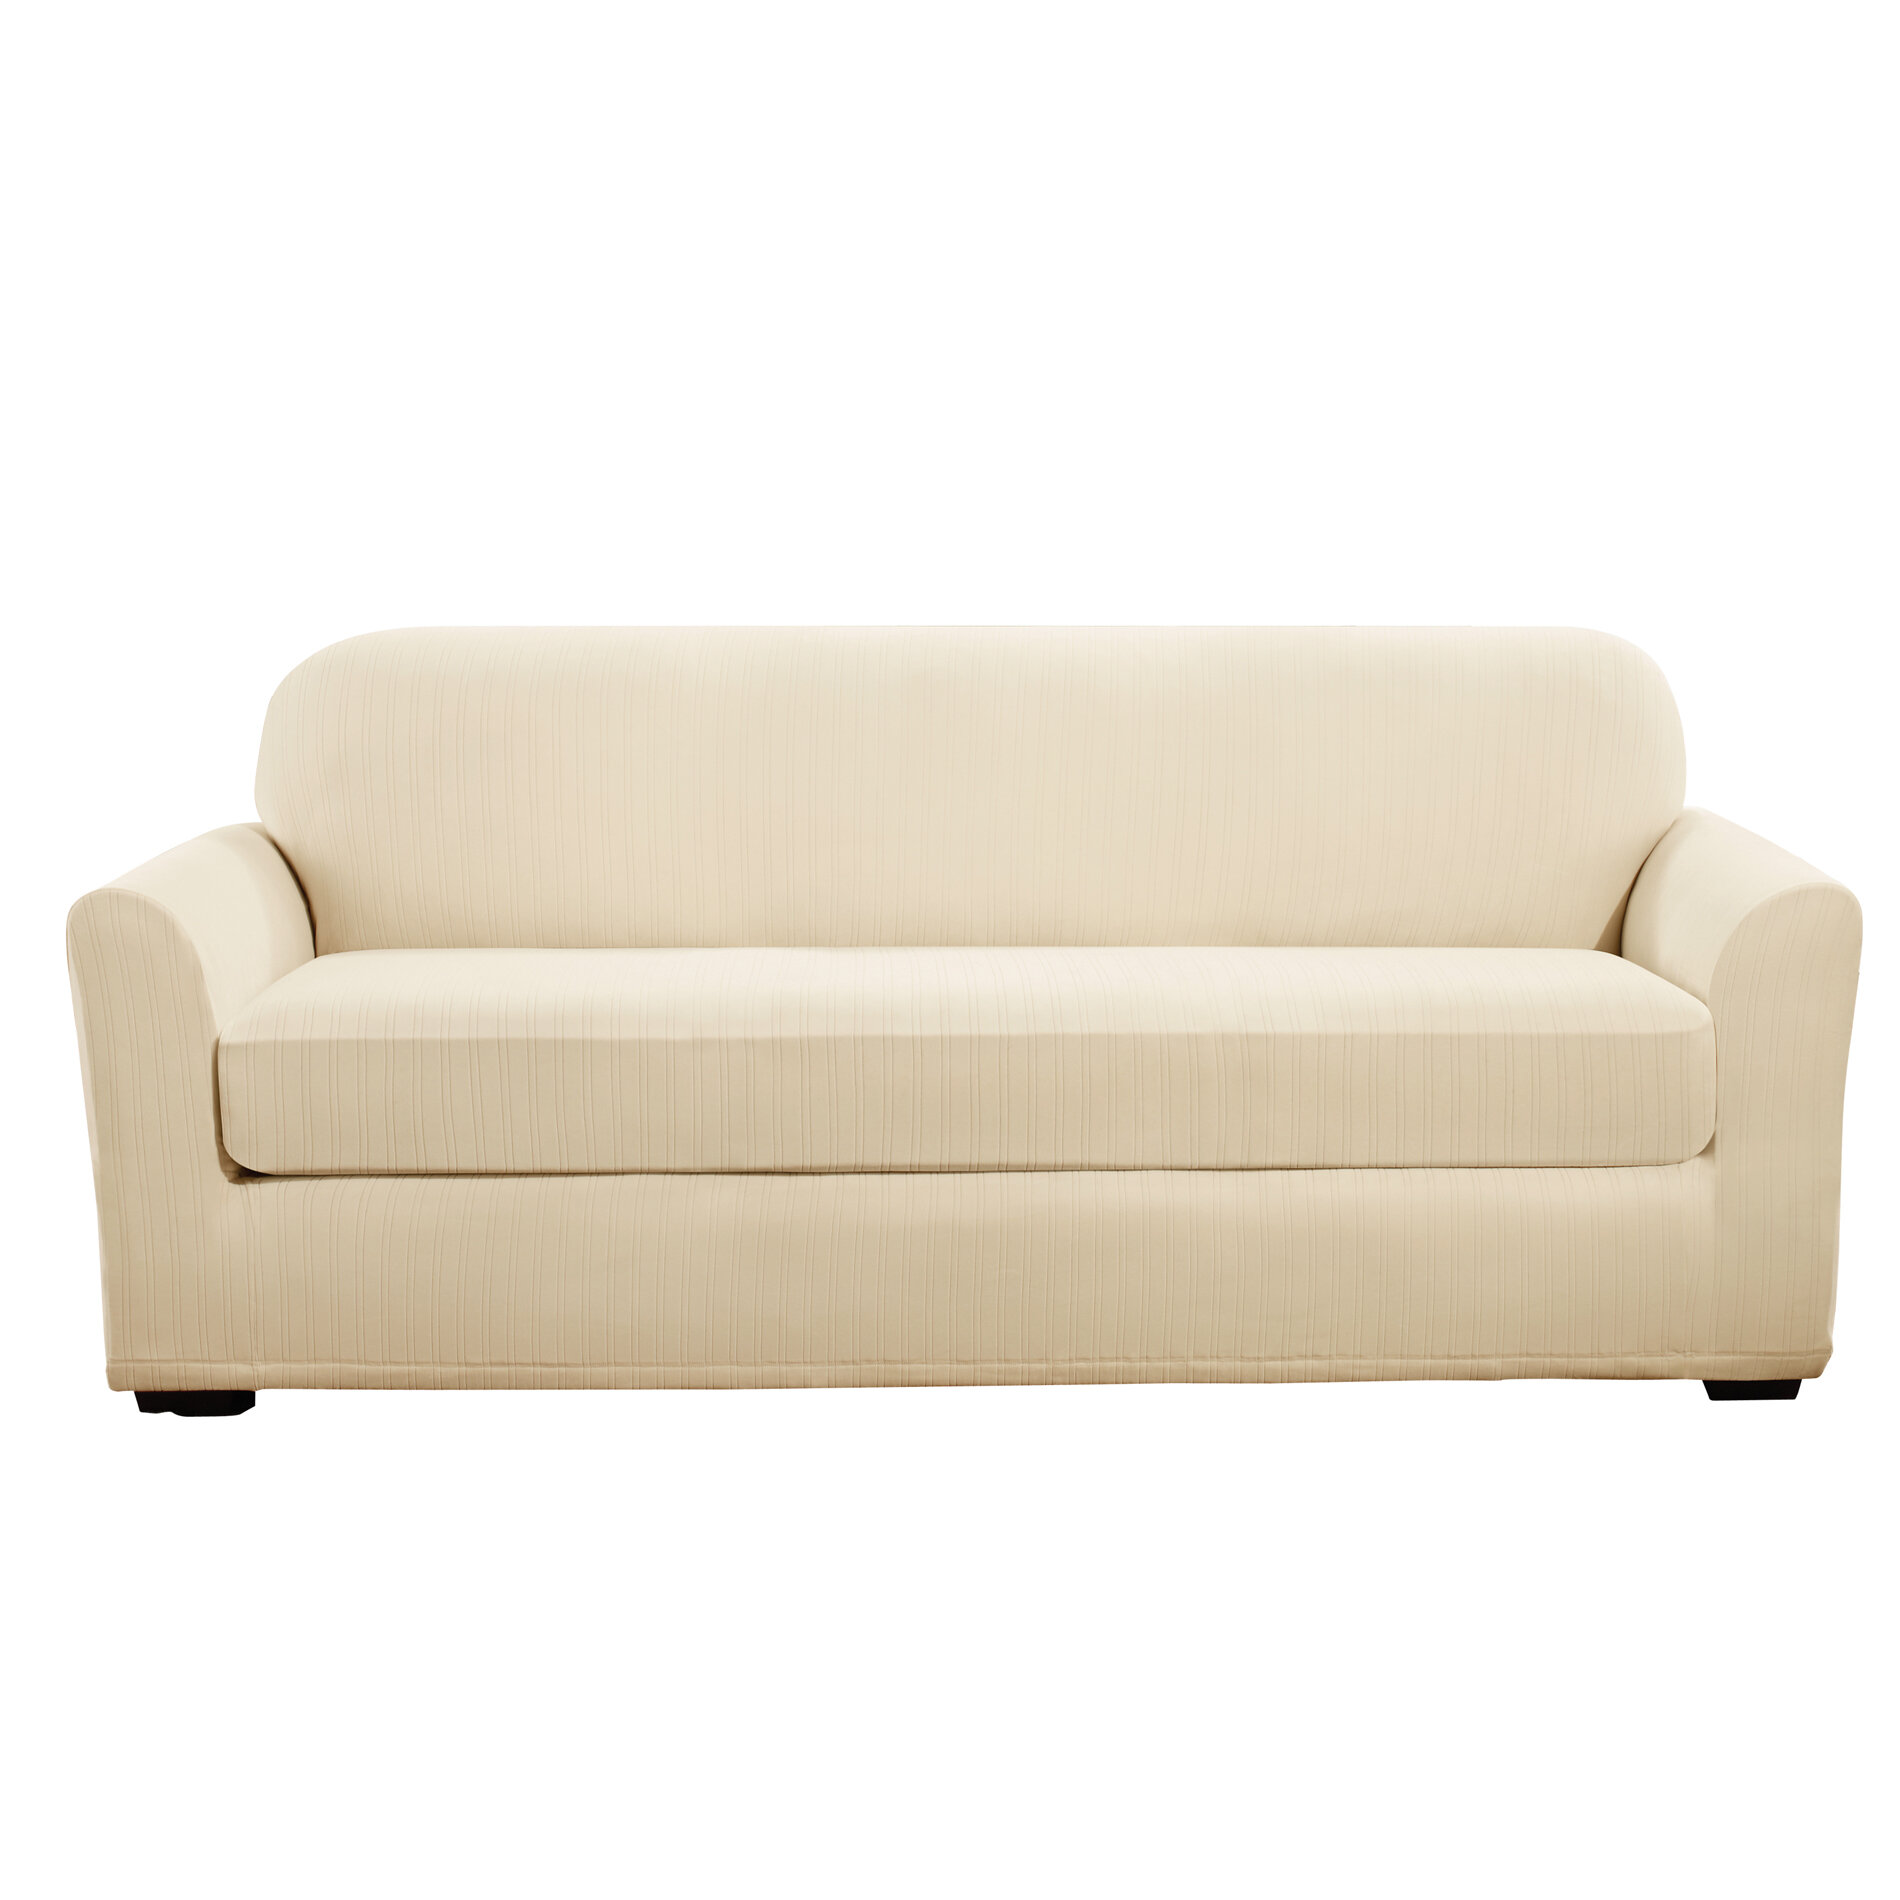 NEW Stretch stripe Brown Box-cushion Sofa surefit sure fit  slipcover 